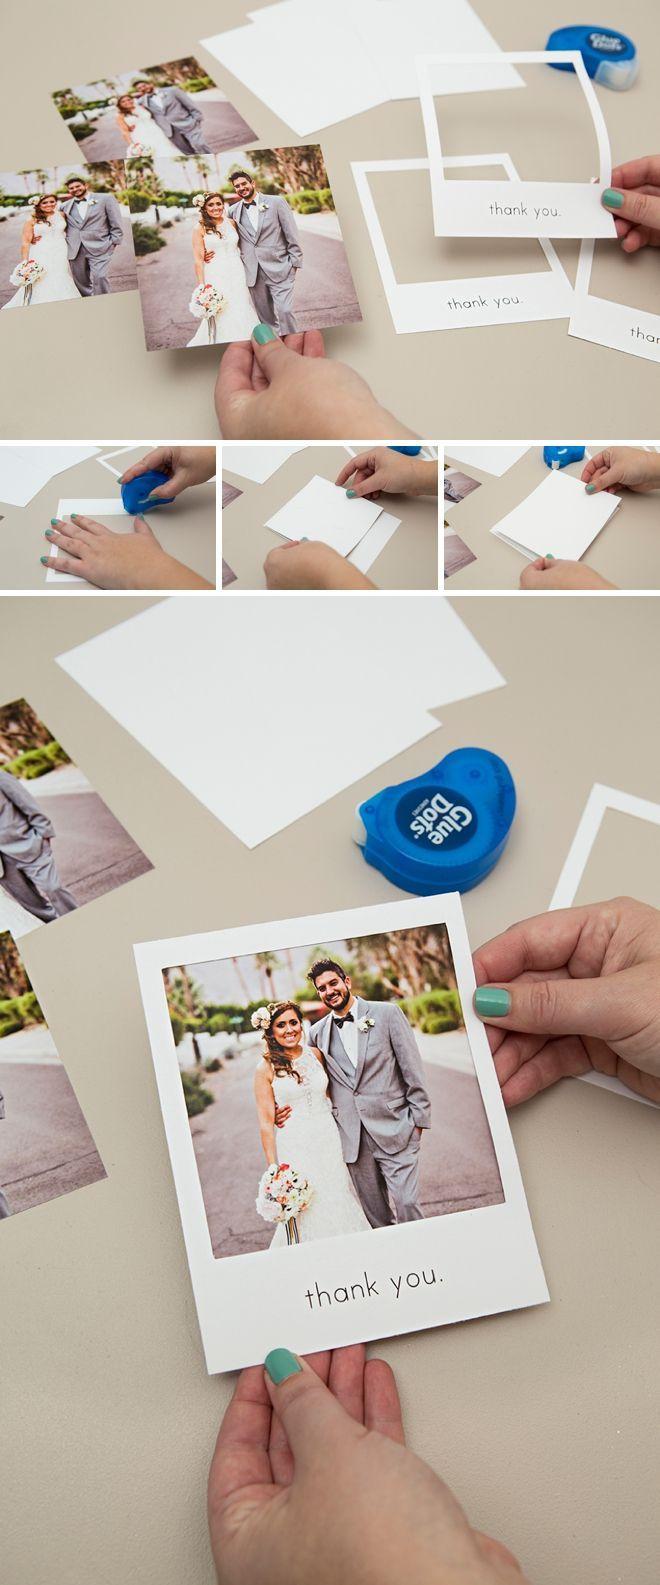 Hochzeit - Check Out These Adorable DIY "Polaroid" Photo Thank You Cards!